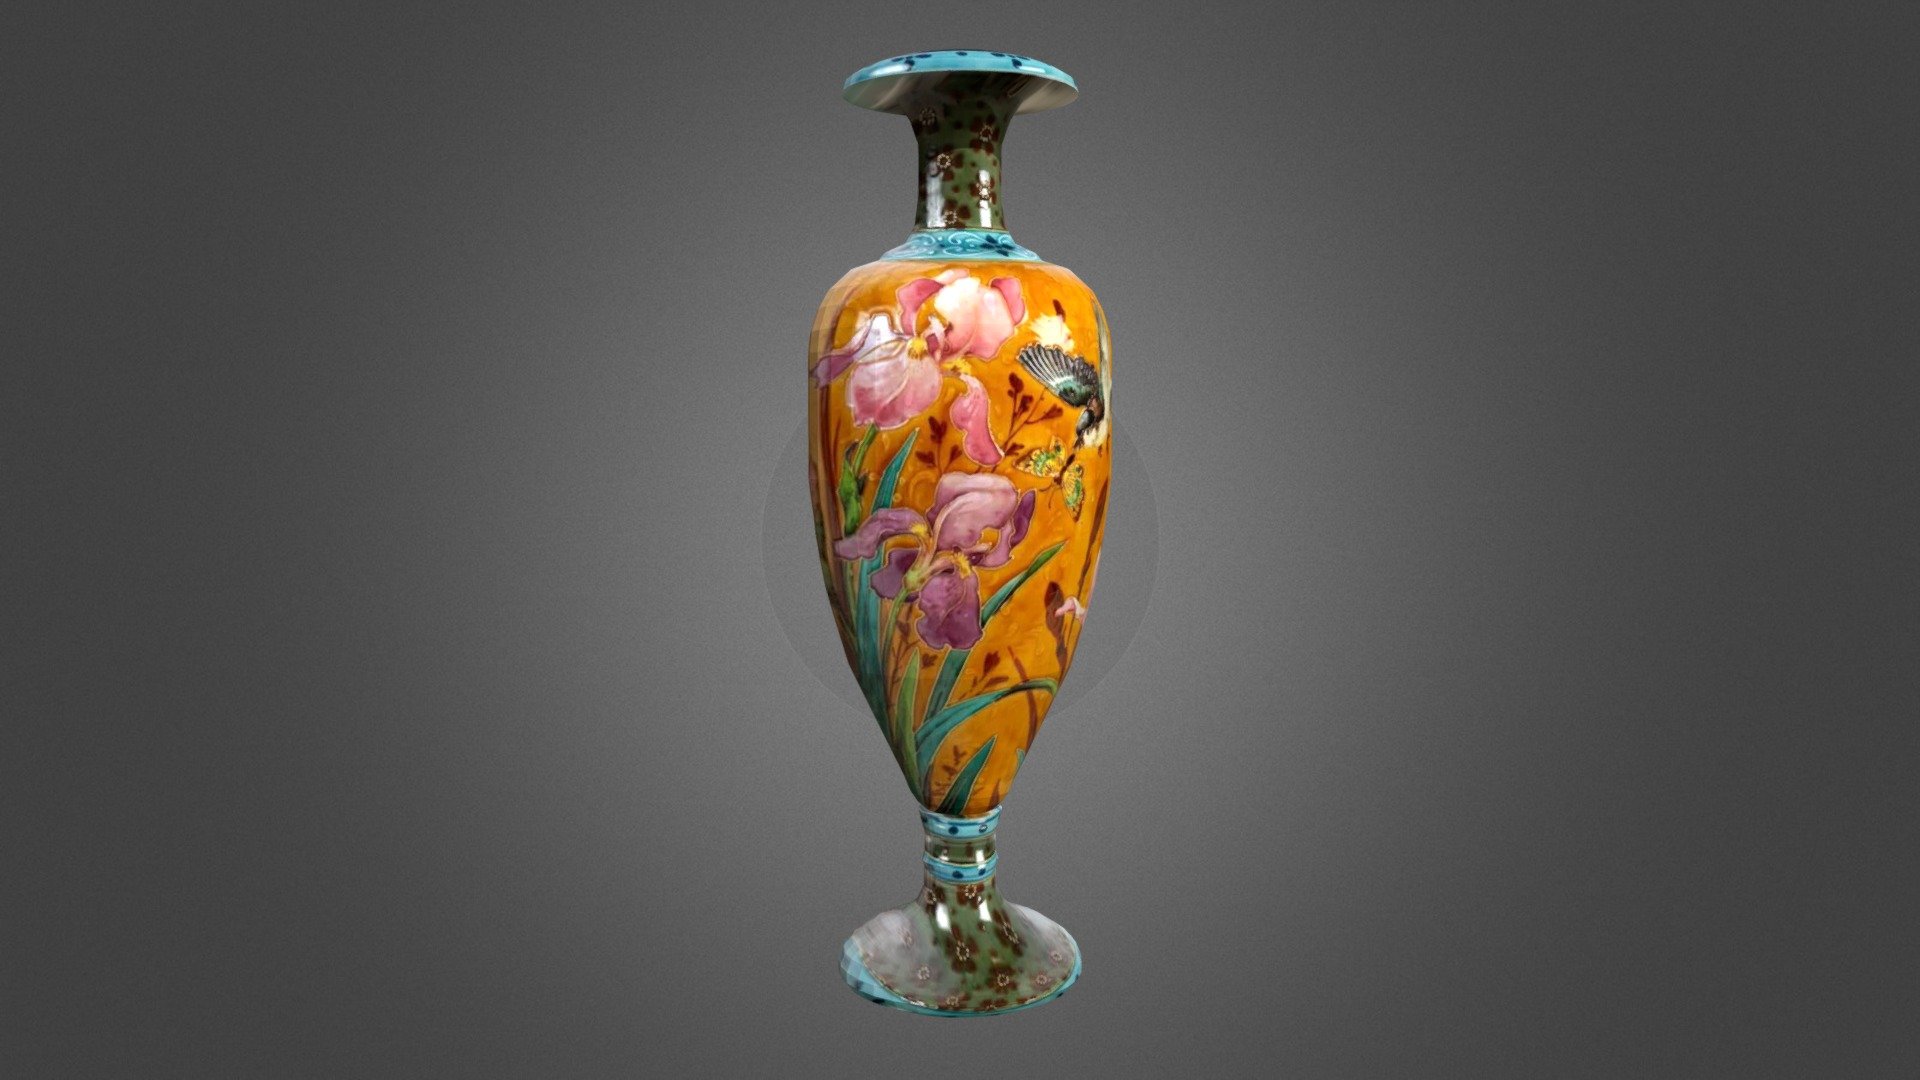 Vase créer avec Blender

Vases v2 - Vases 2 - 3D model by Art-Conan 3d model